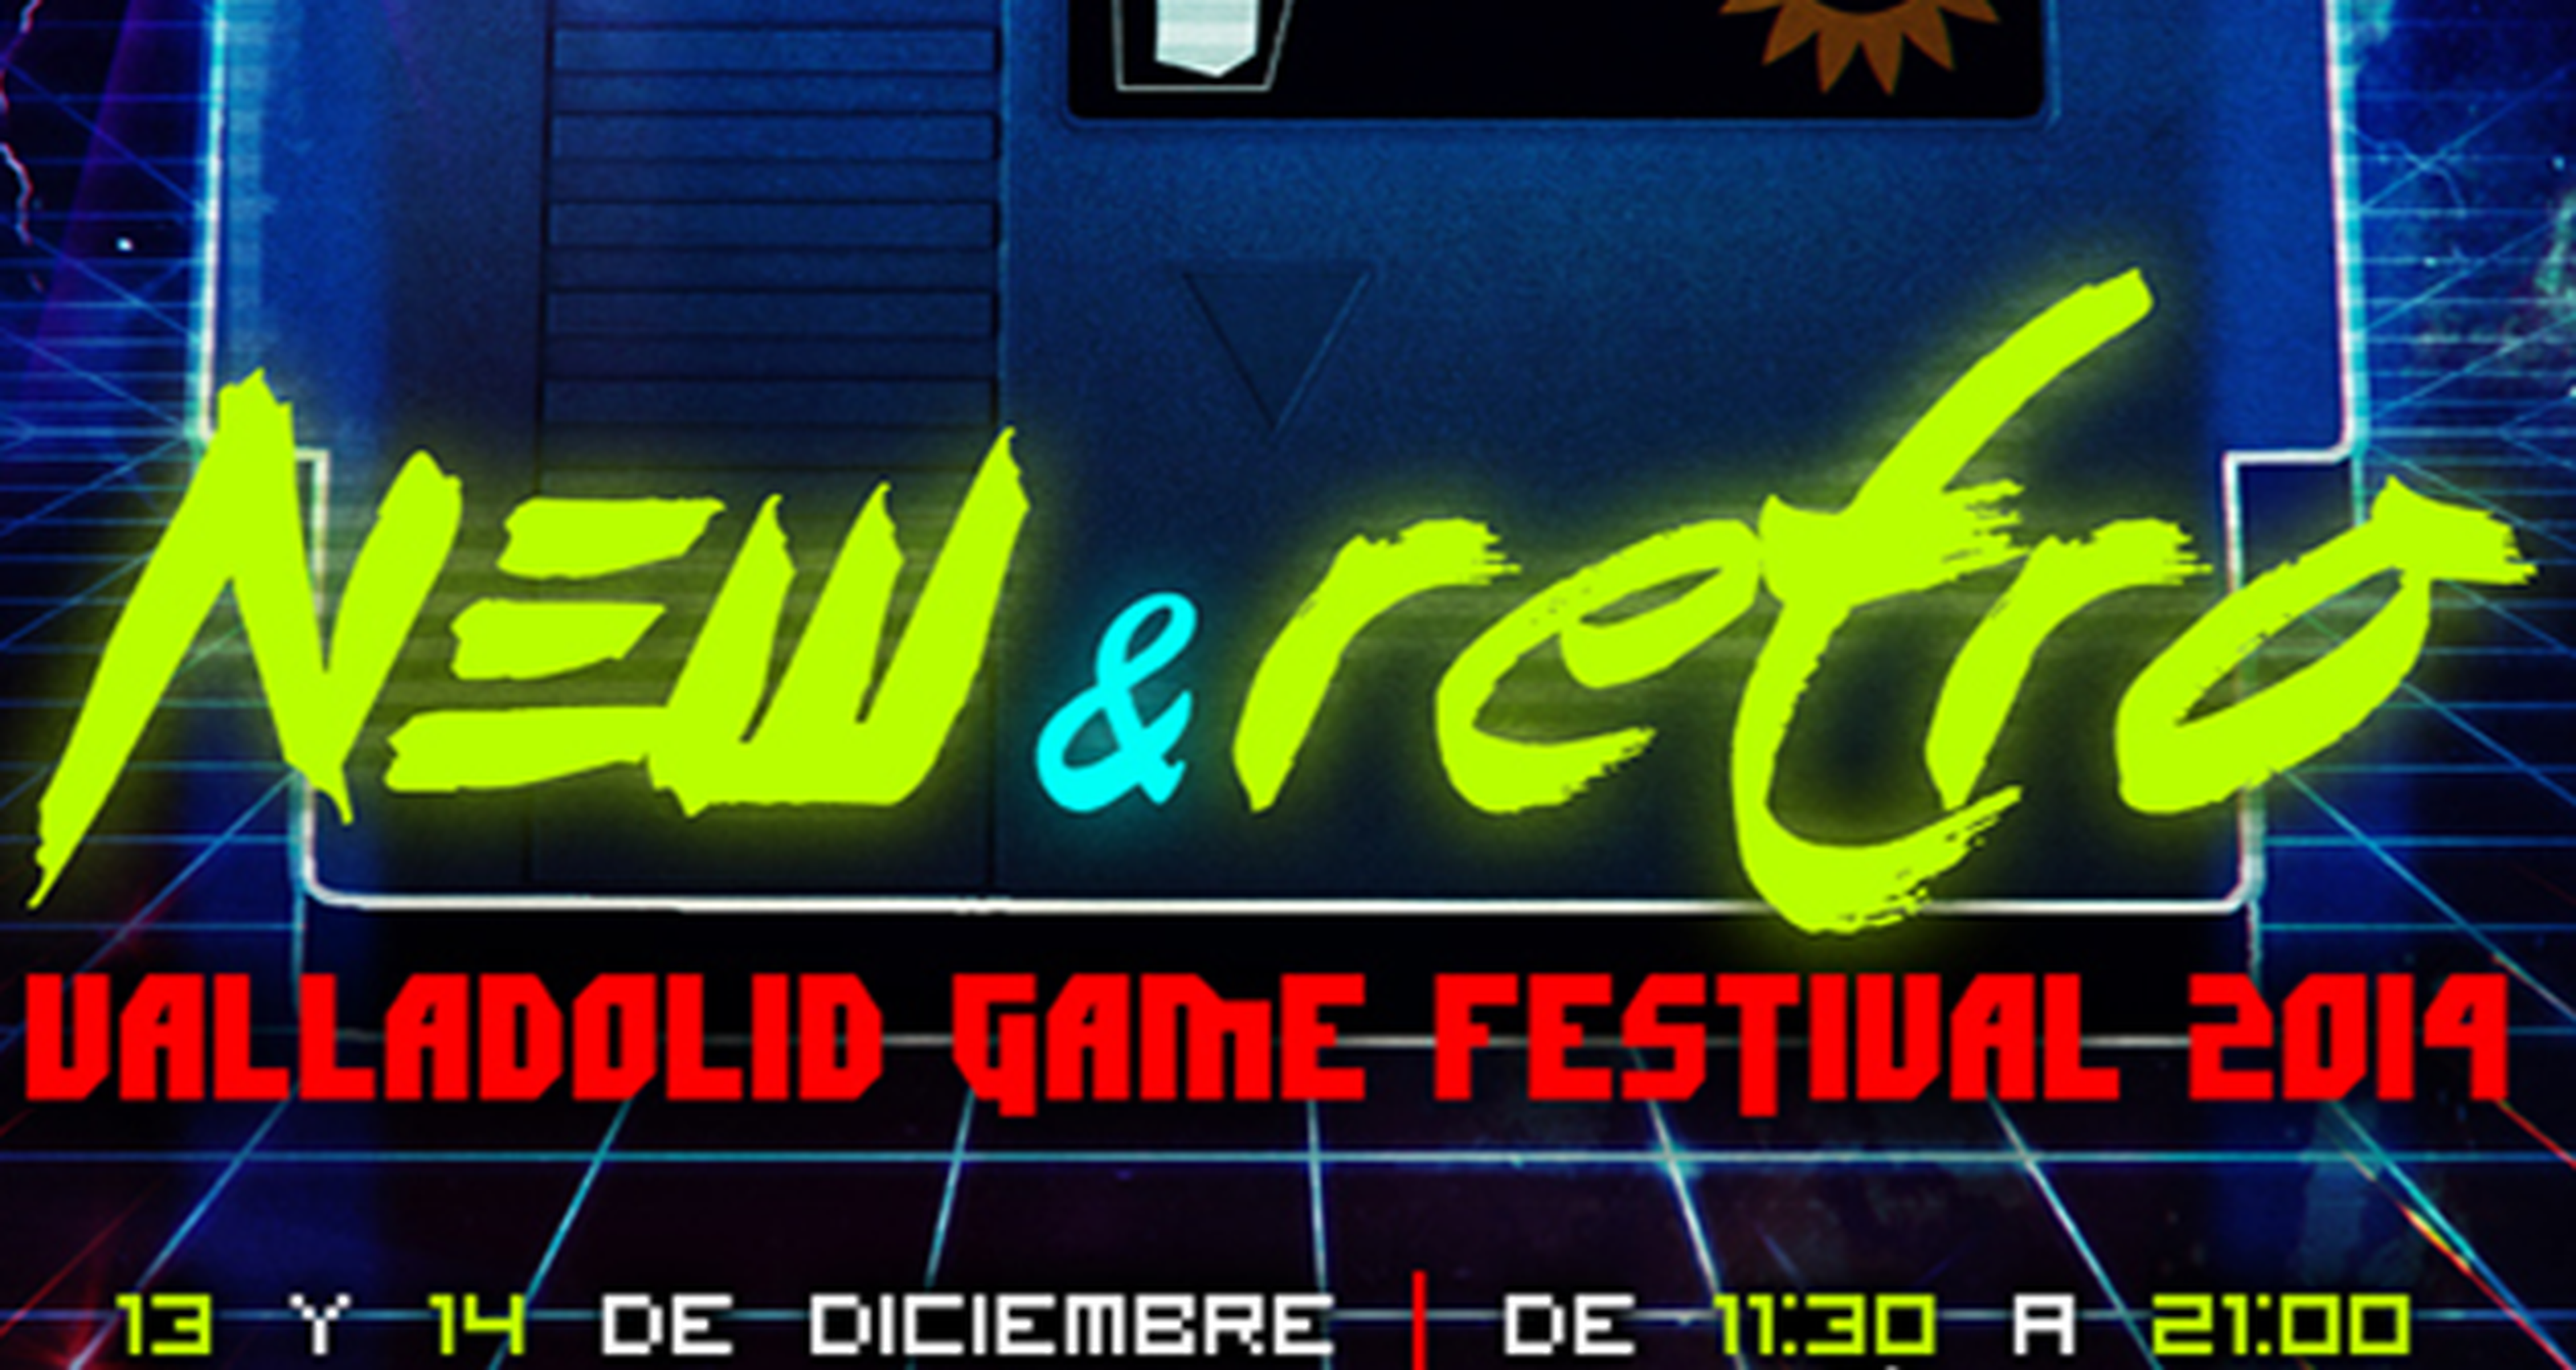 New &amp; Retro Game Festival, este fin de semana en Valladolid